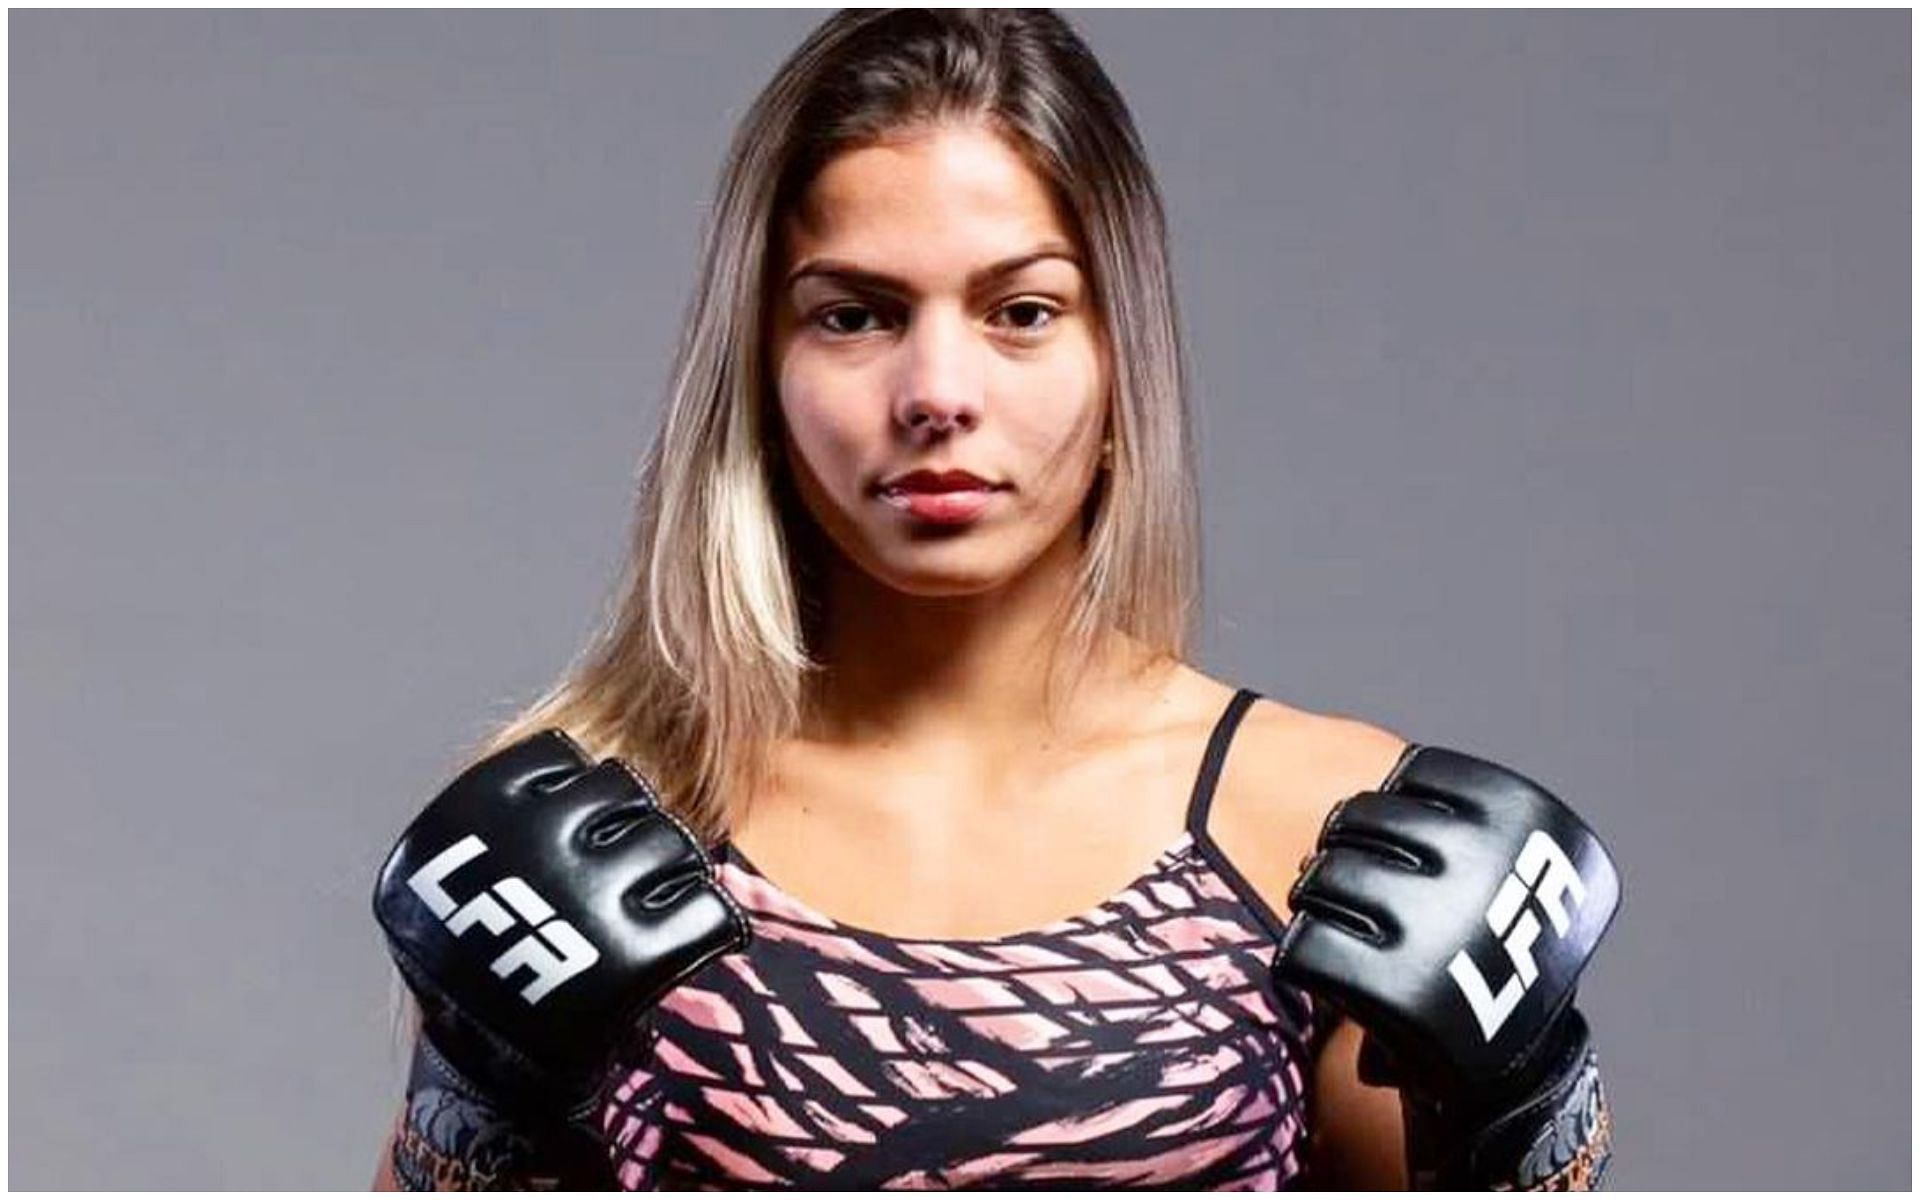 Luana Santos has signed with the UFC as a women